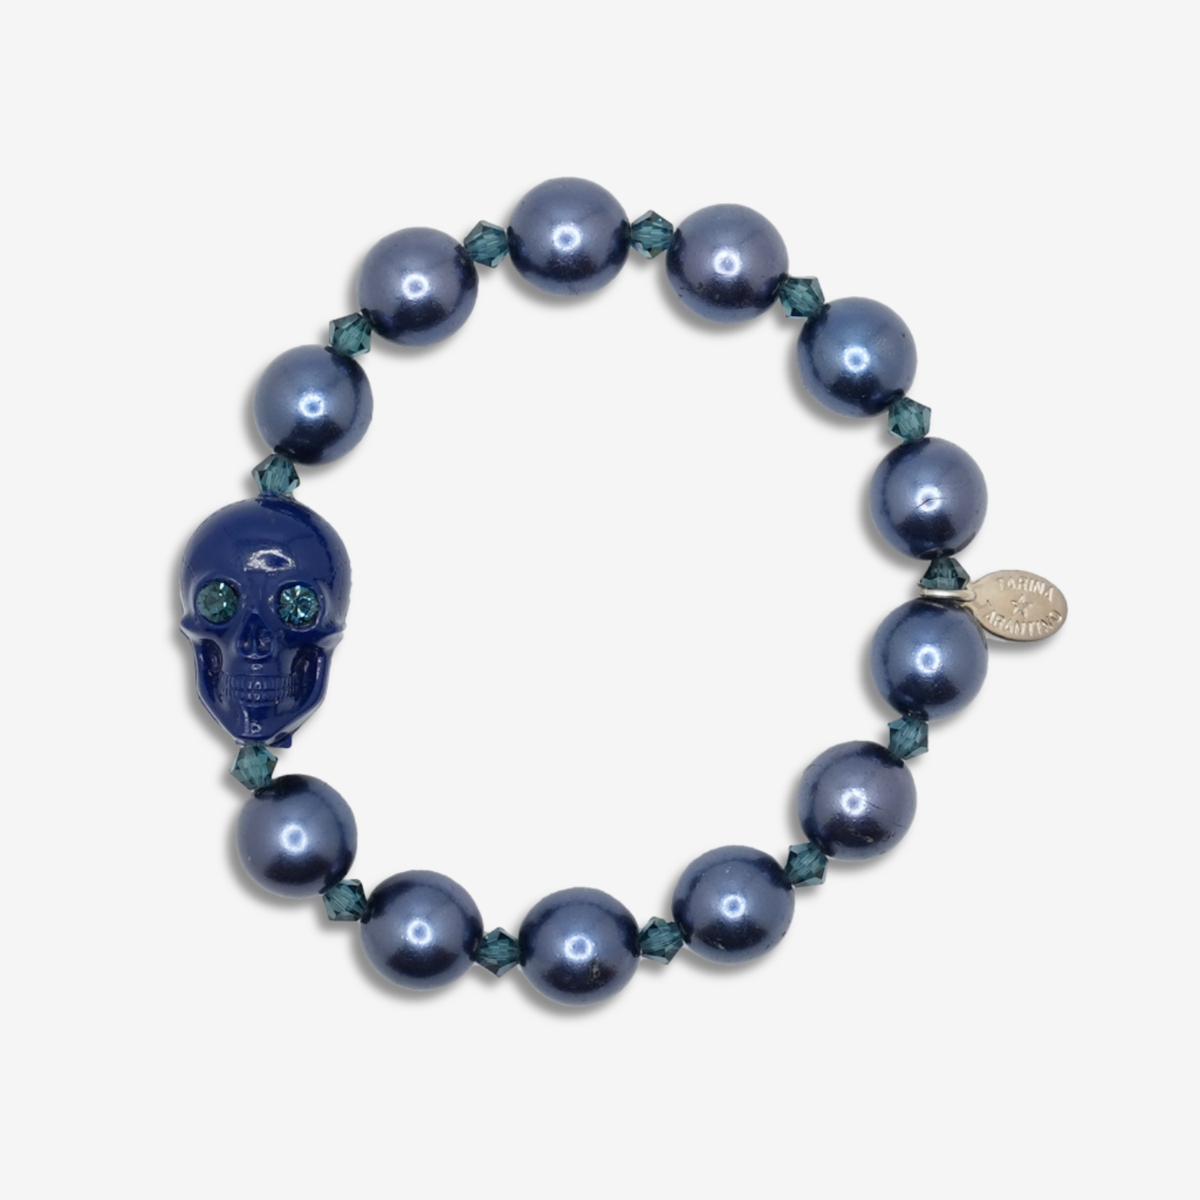 Crystal Skull (Swarovski) and Lava stone bracelet (10mm beads) — Wristocracy